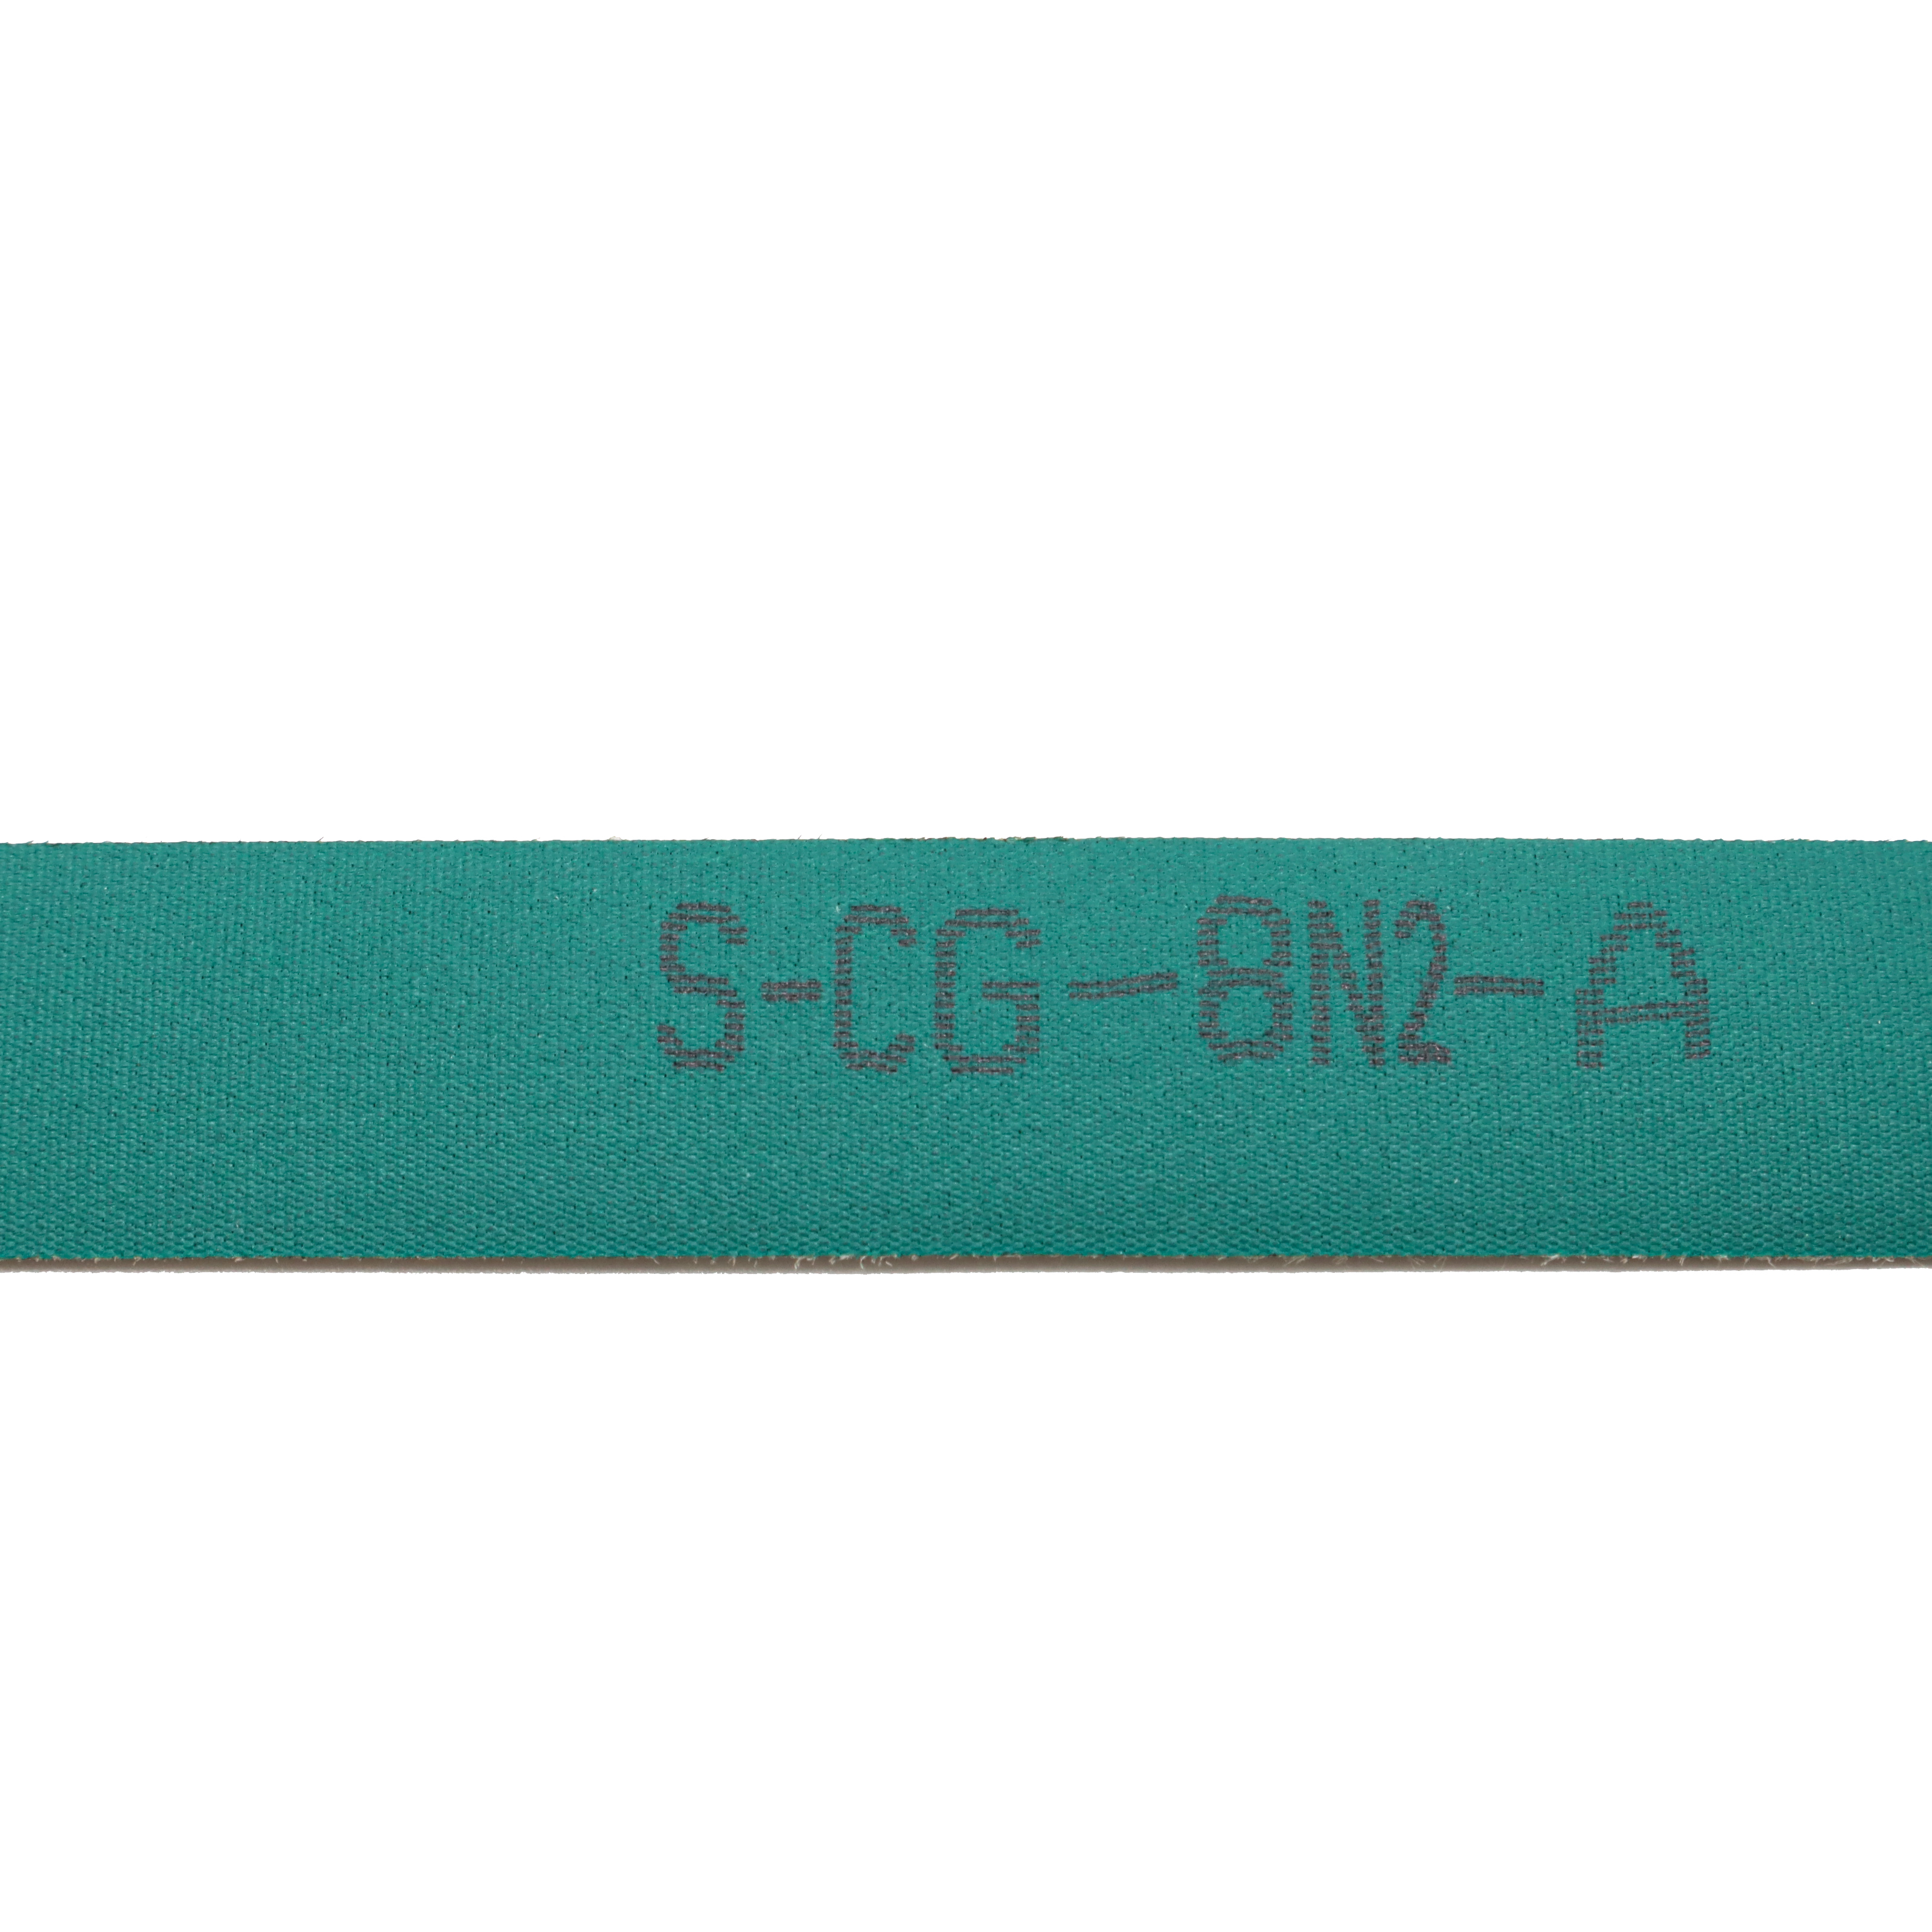 S-CG-8N2-A